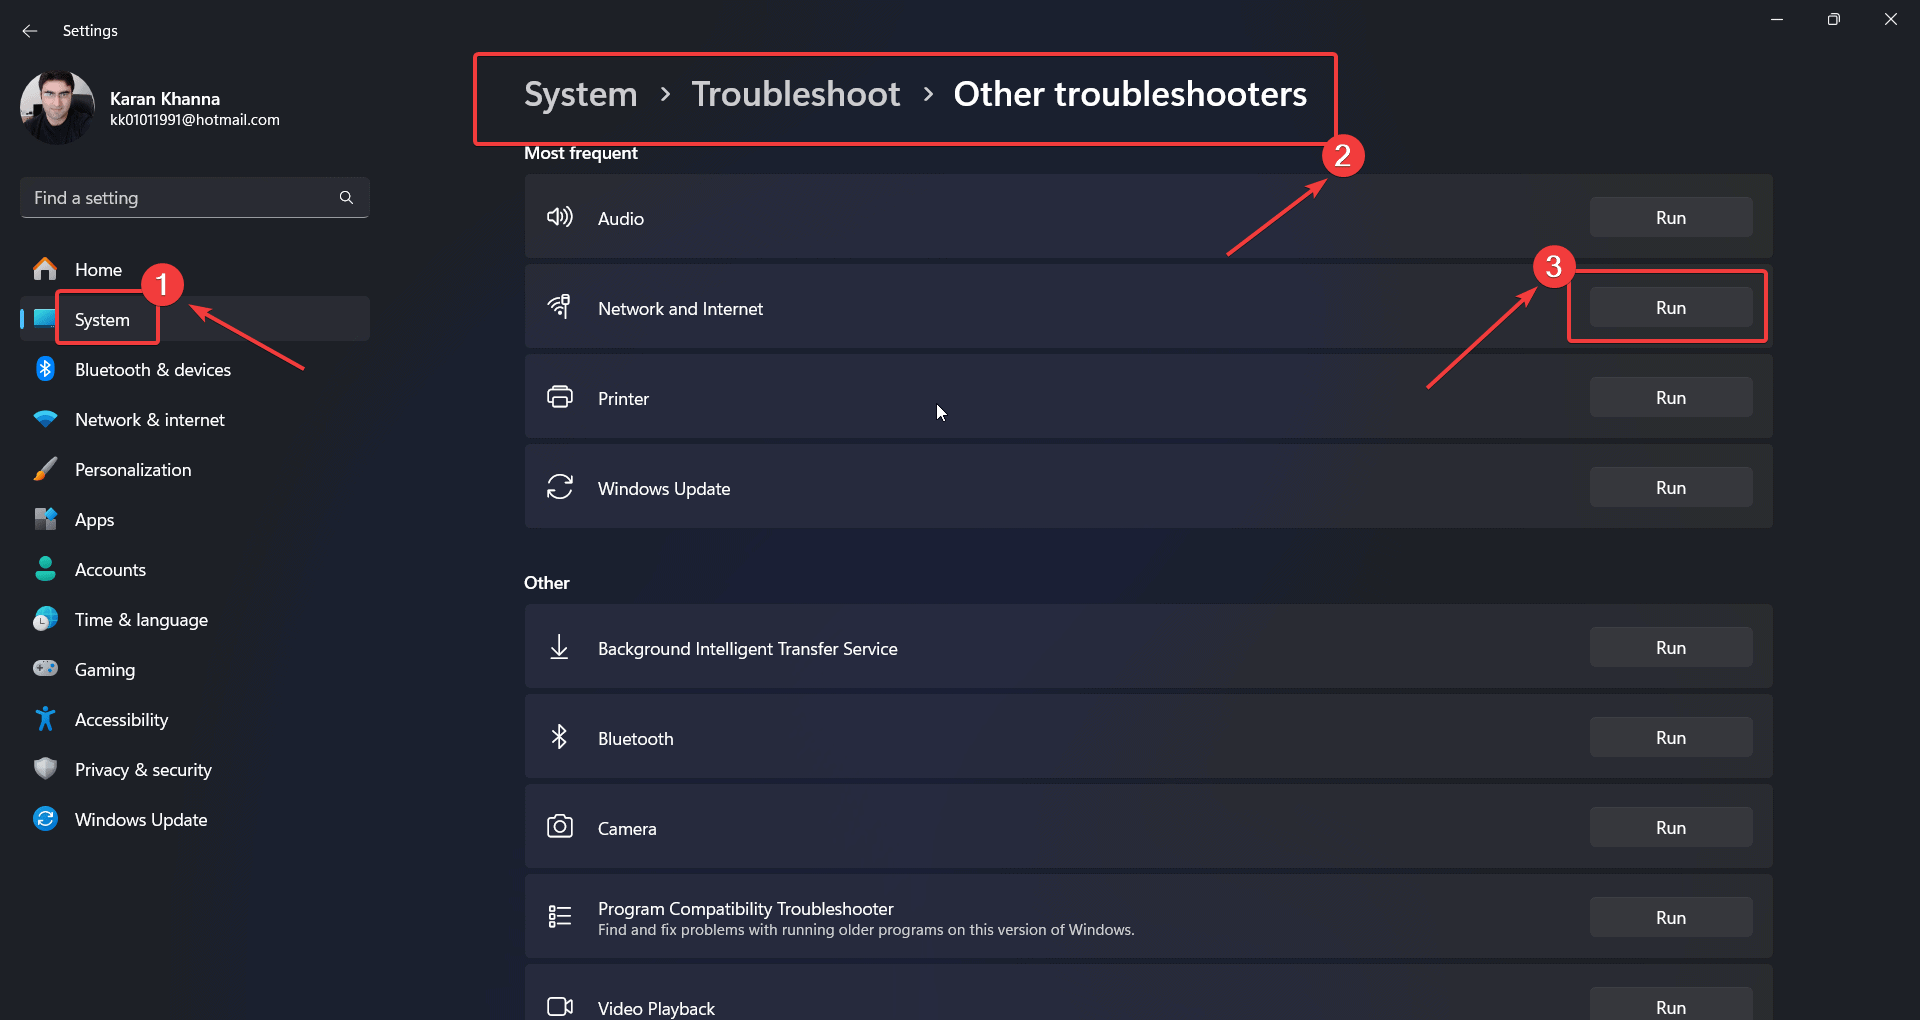 Run Network Adapter troubleshooter